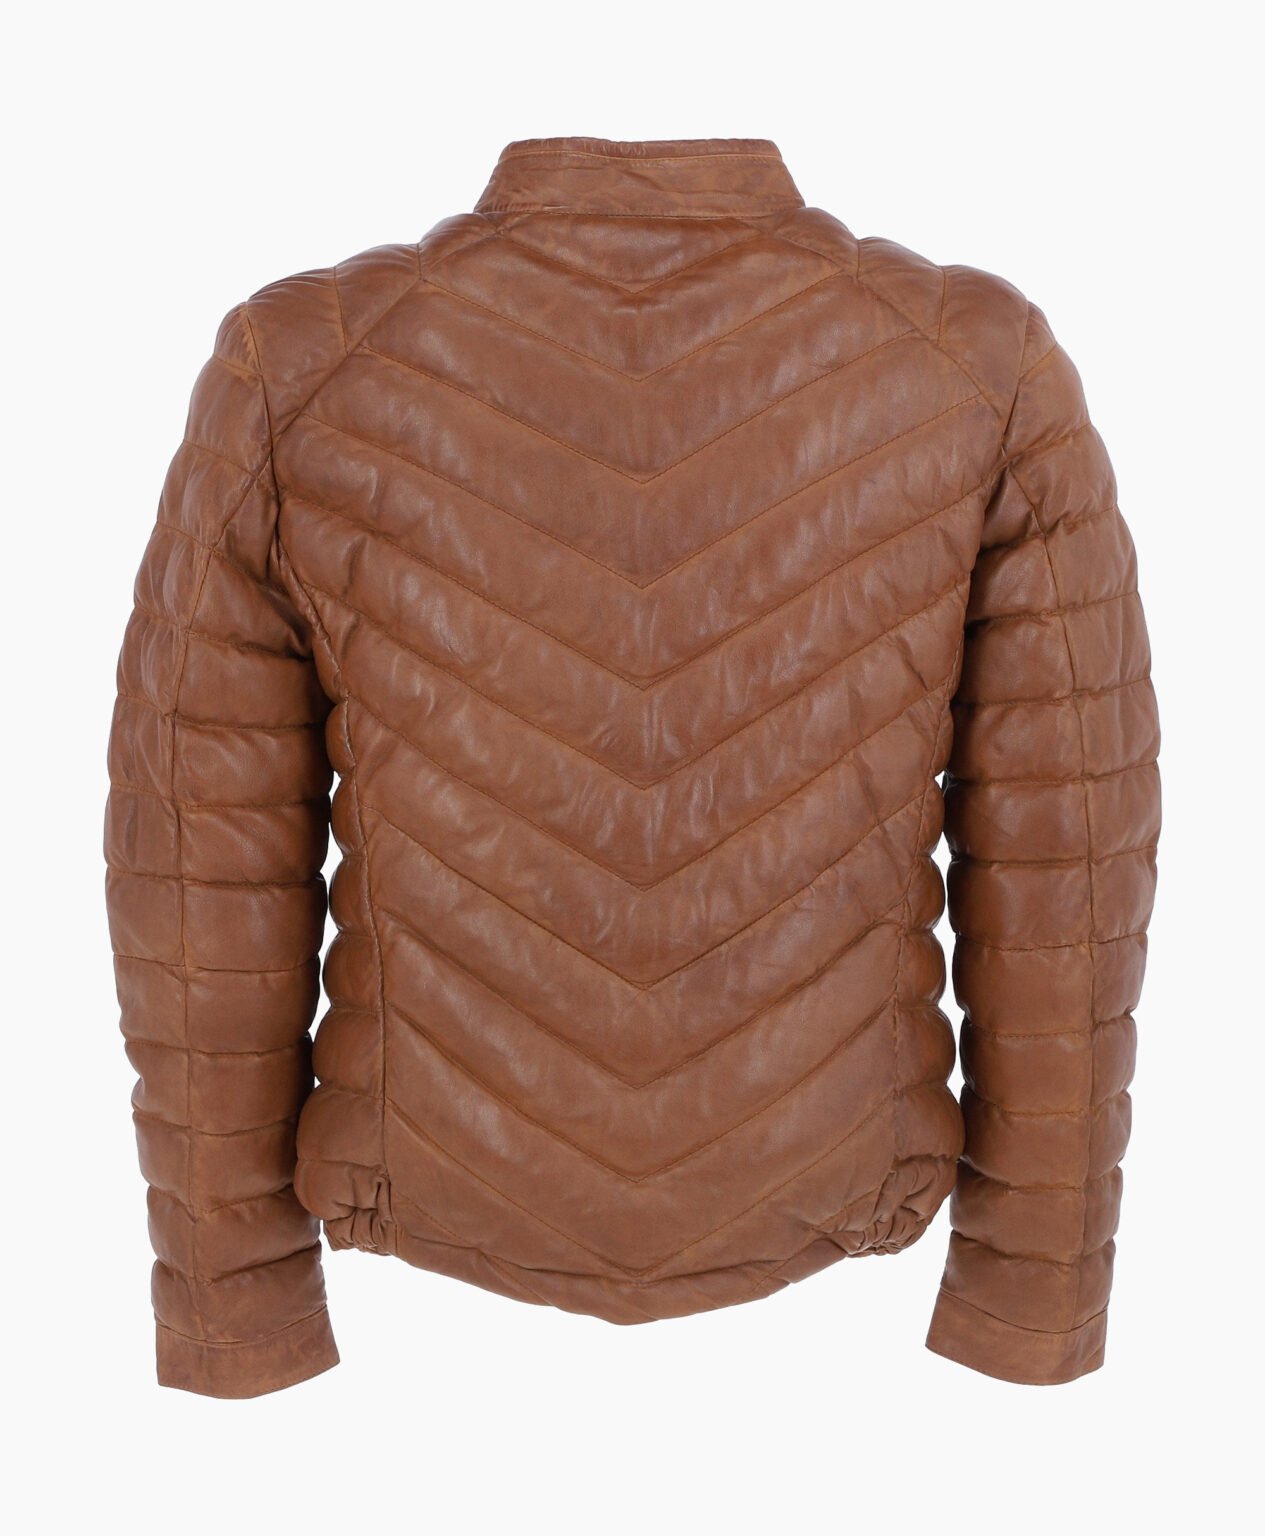 vogue-jacket-leather-puffer-jacket-tan-prescott-image202